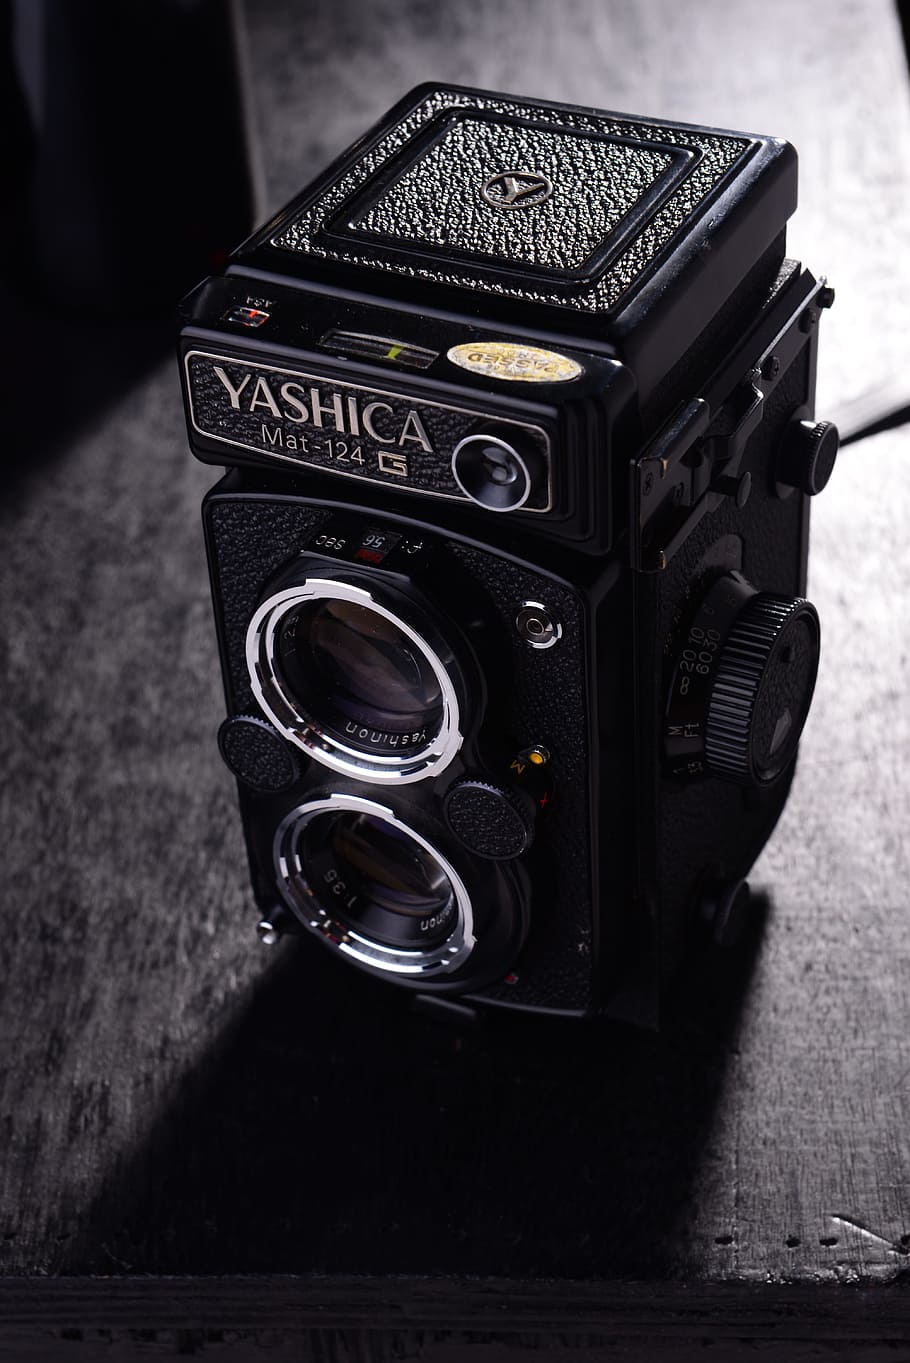 Studio, Camera, Yashica, single object, studio shot, close-up, black background, photography themes, technology, camera - photographic equipment